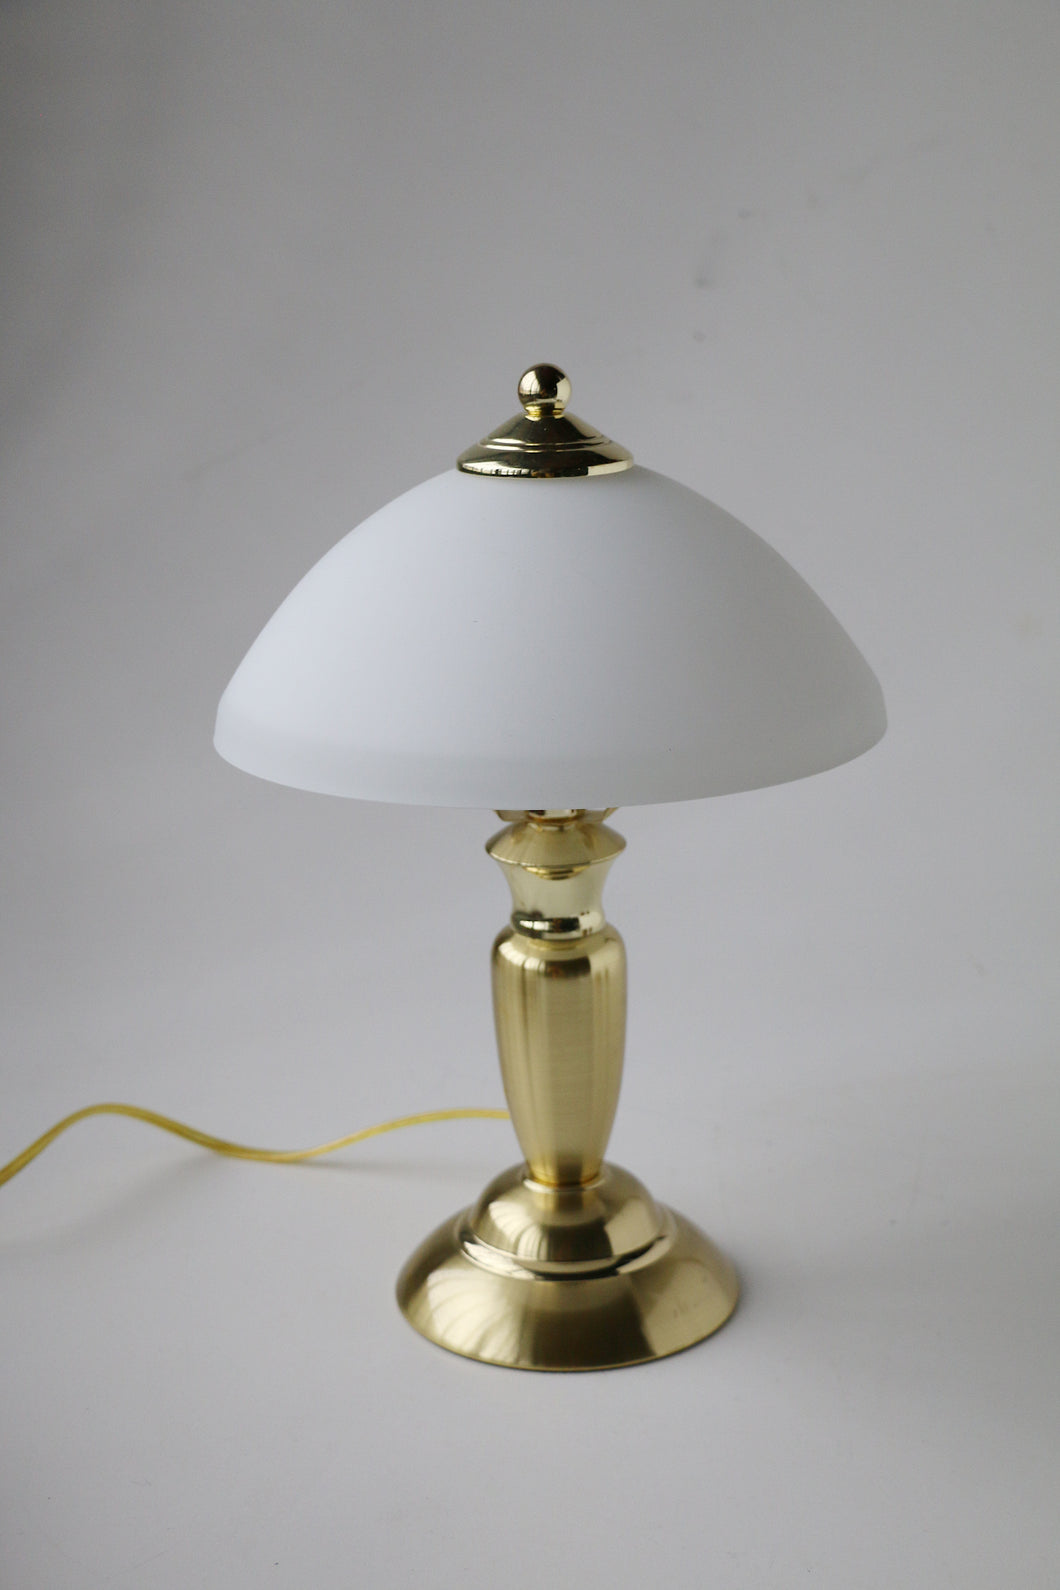 Brass Touch Lamp